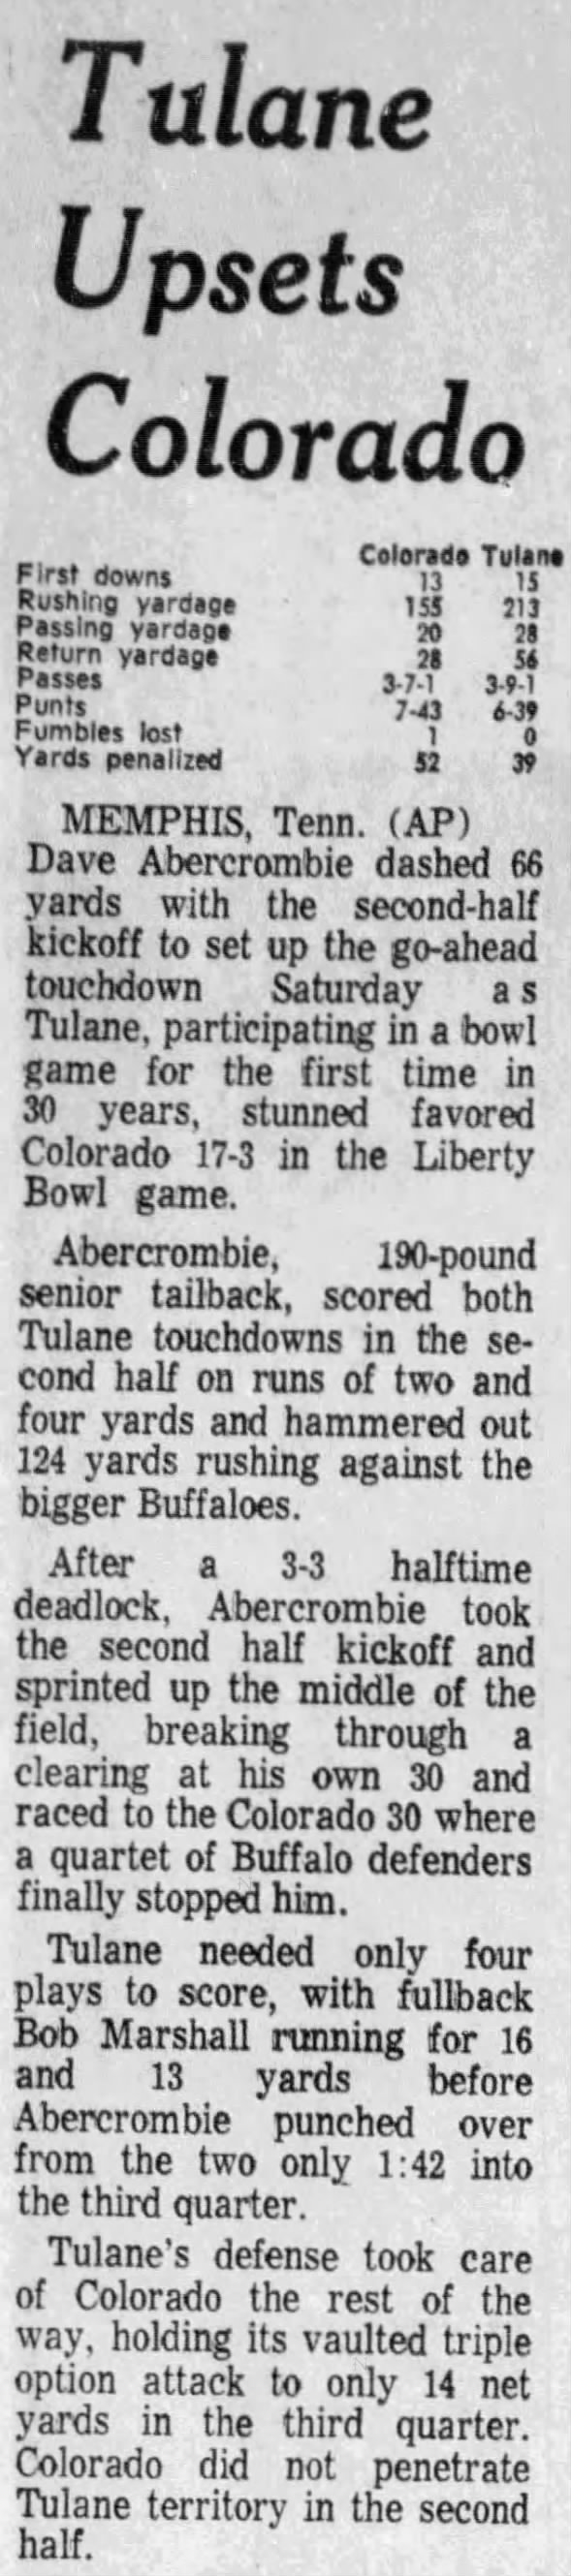 1970 Liberty Bowl, Colorado vs Tulane